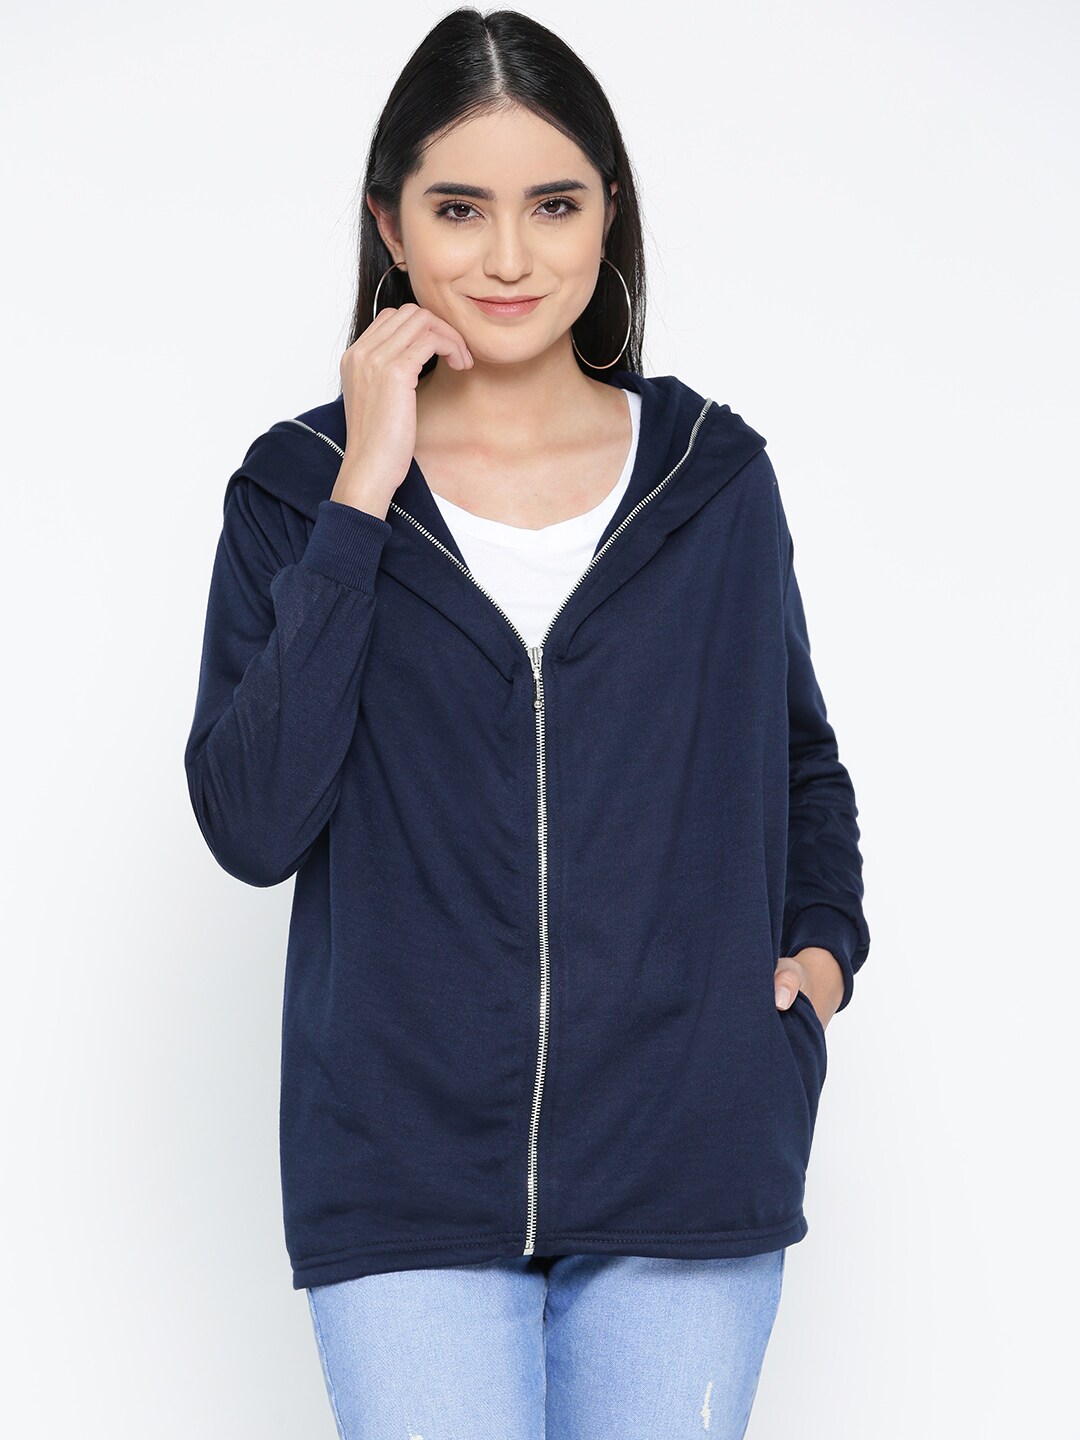 Belle Fille Women Navy Blue Solid Hooded Sweatshirt Price in India